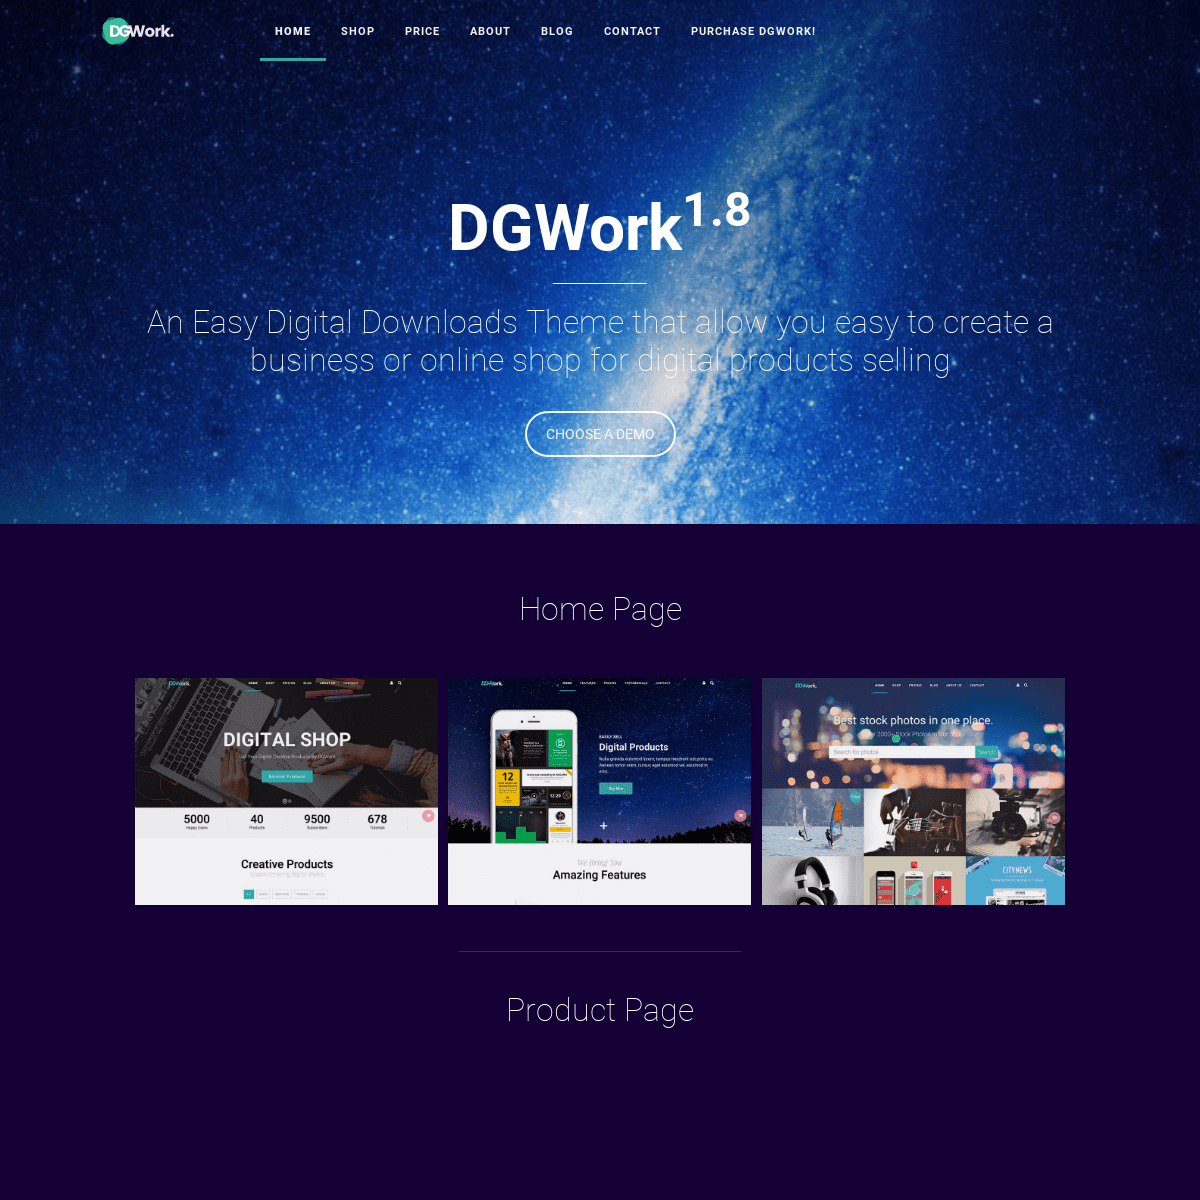 DGWork – A Powerful Easy Digital Downloads Theme